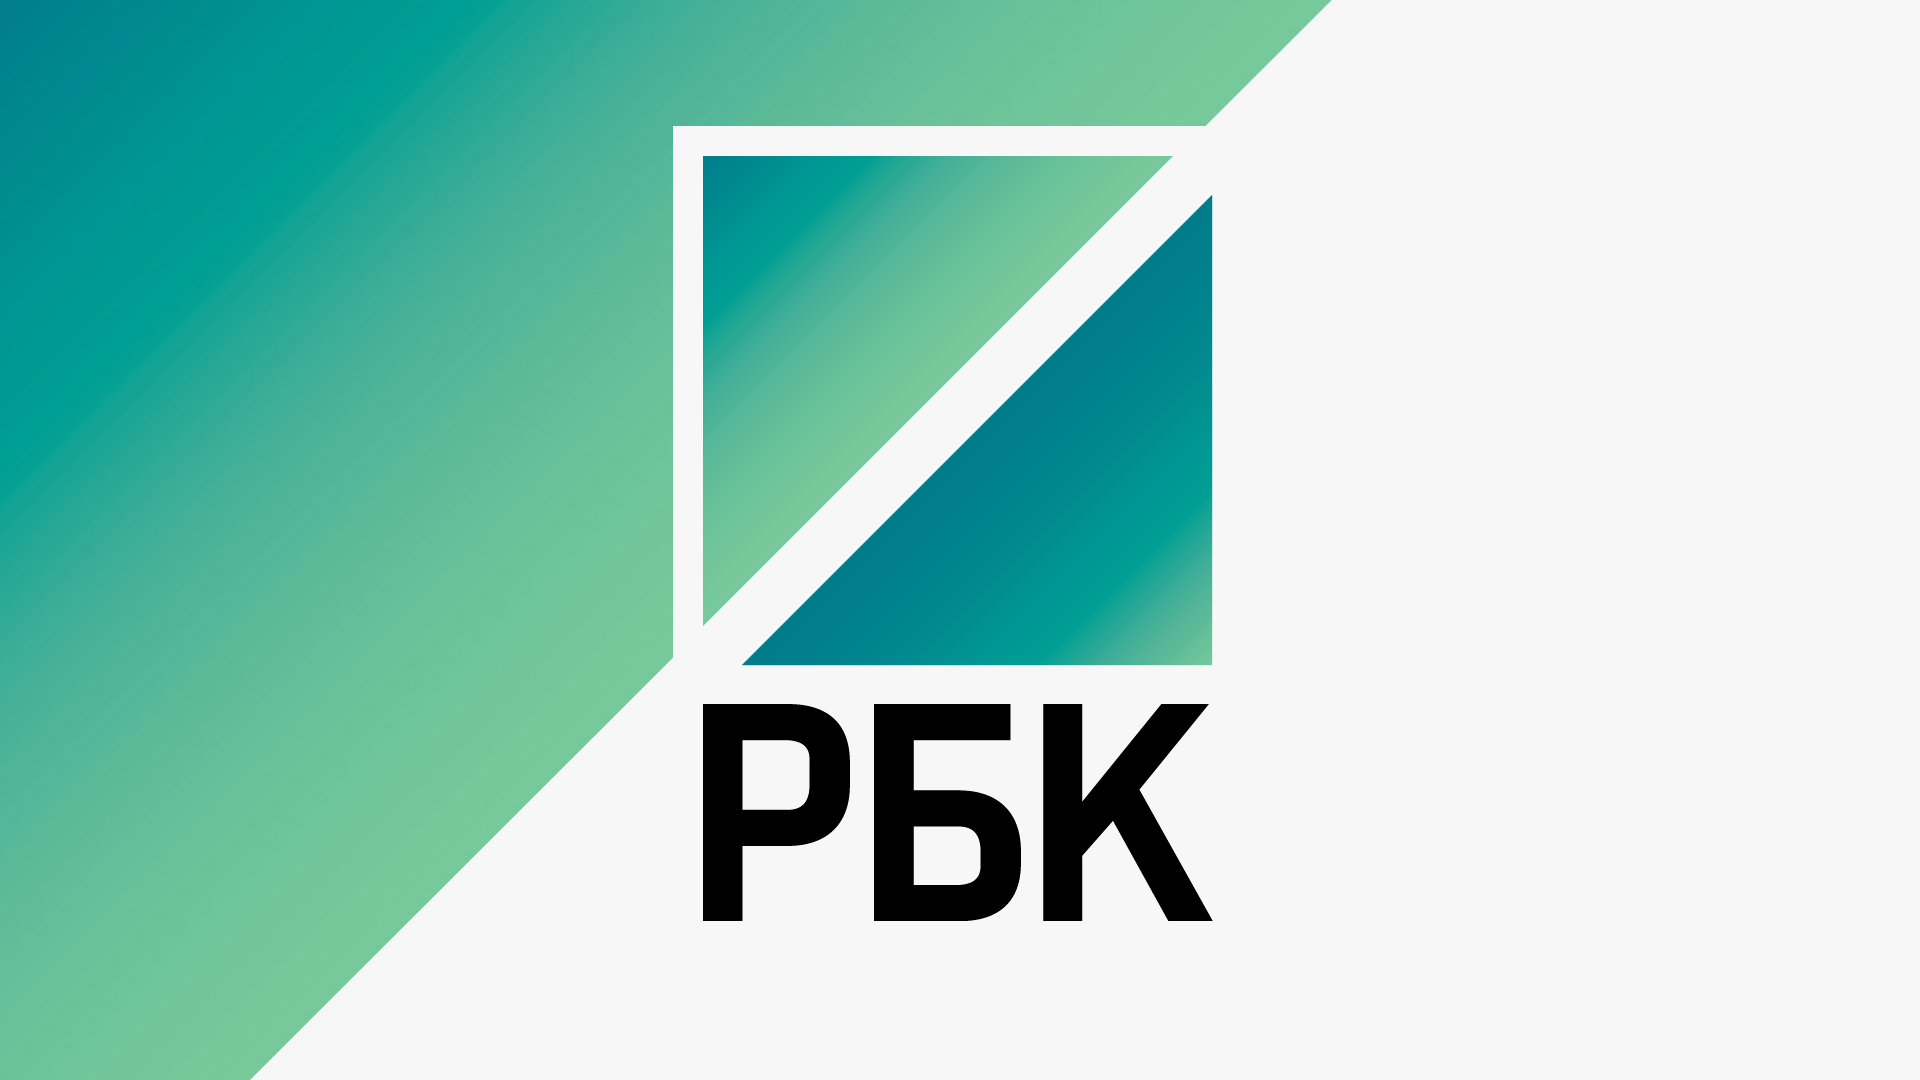 Канал рбк. РБК логотип. Телеканал РБК. РБК ТВ. Логотип телеканала РБК - ТВ.